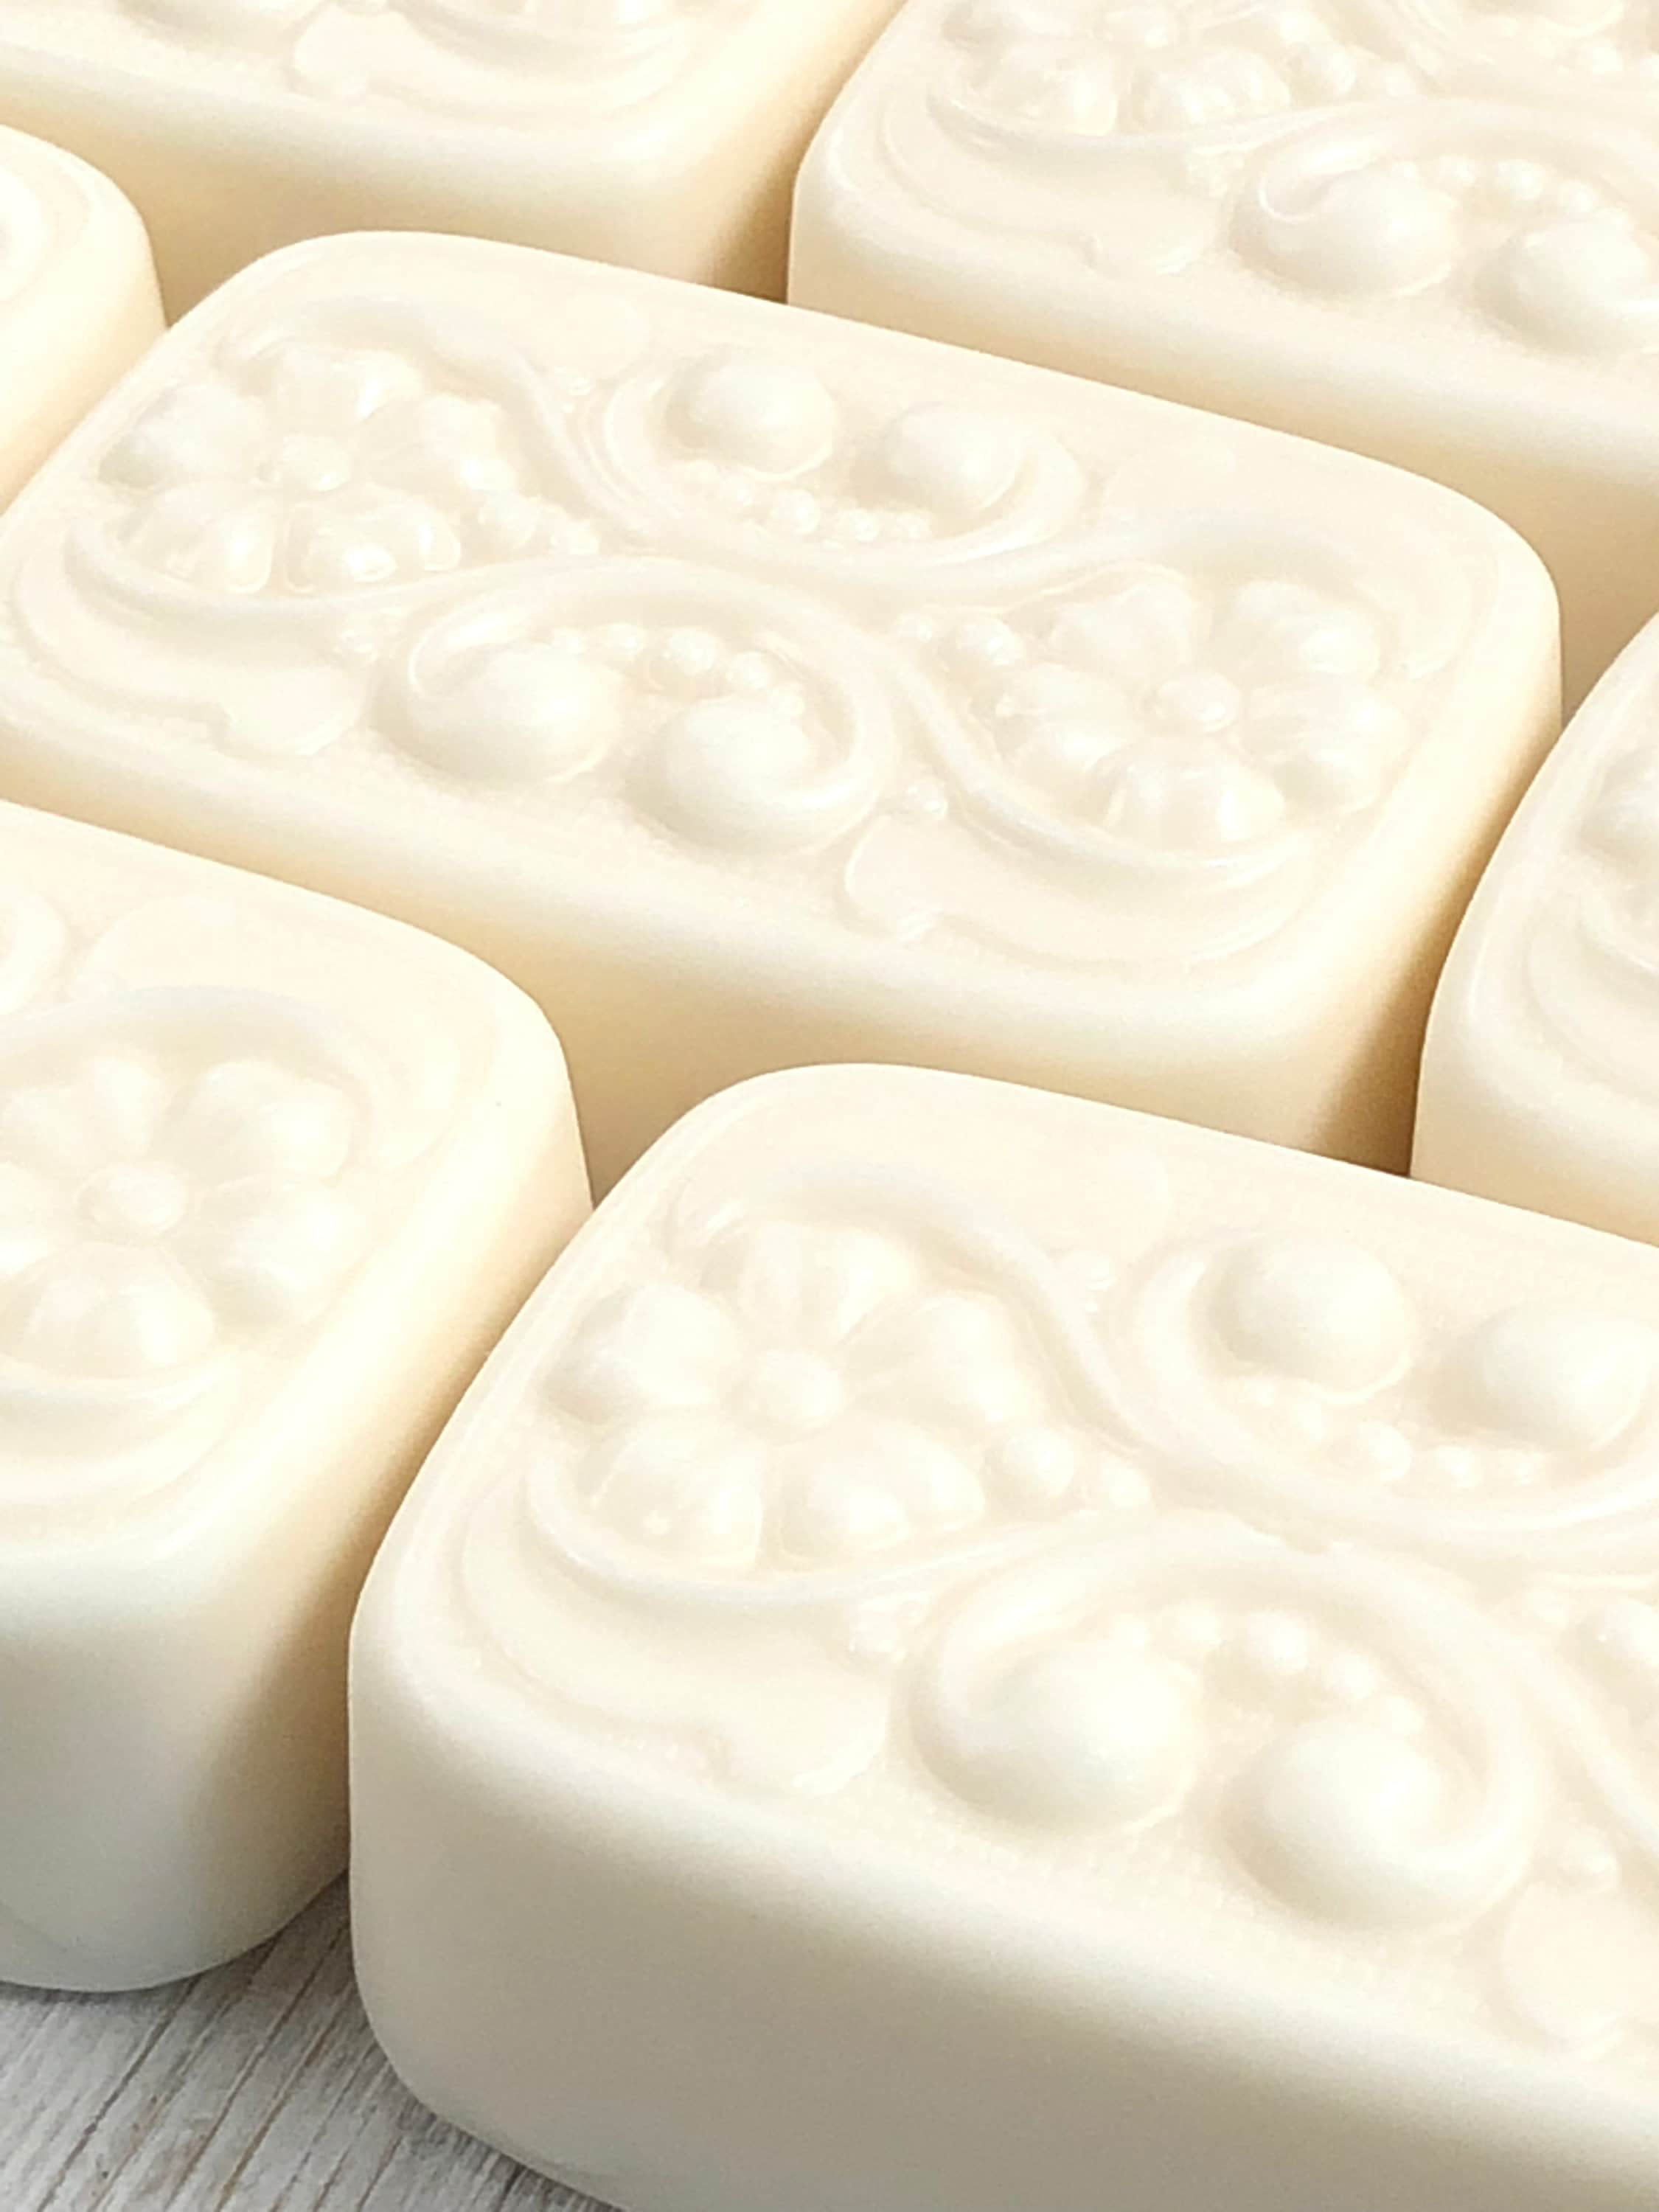 How to make Lemon Shea Butter Soap